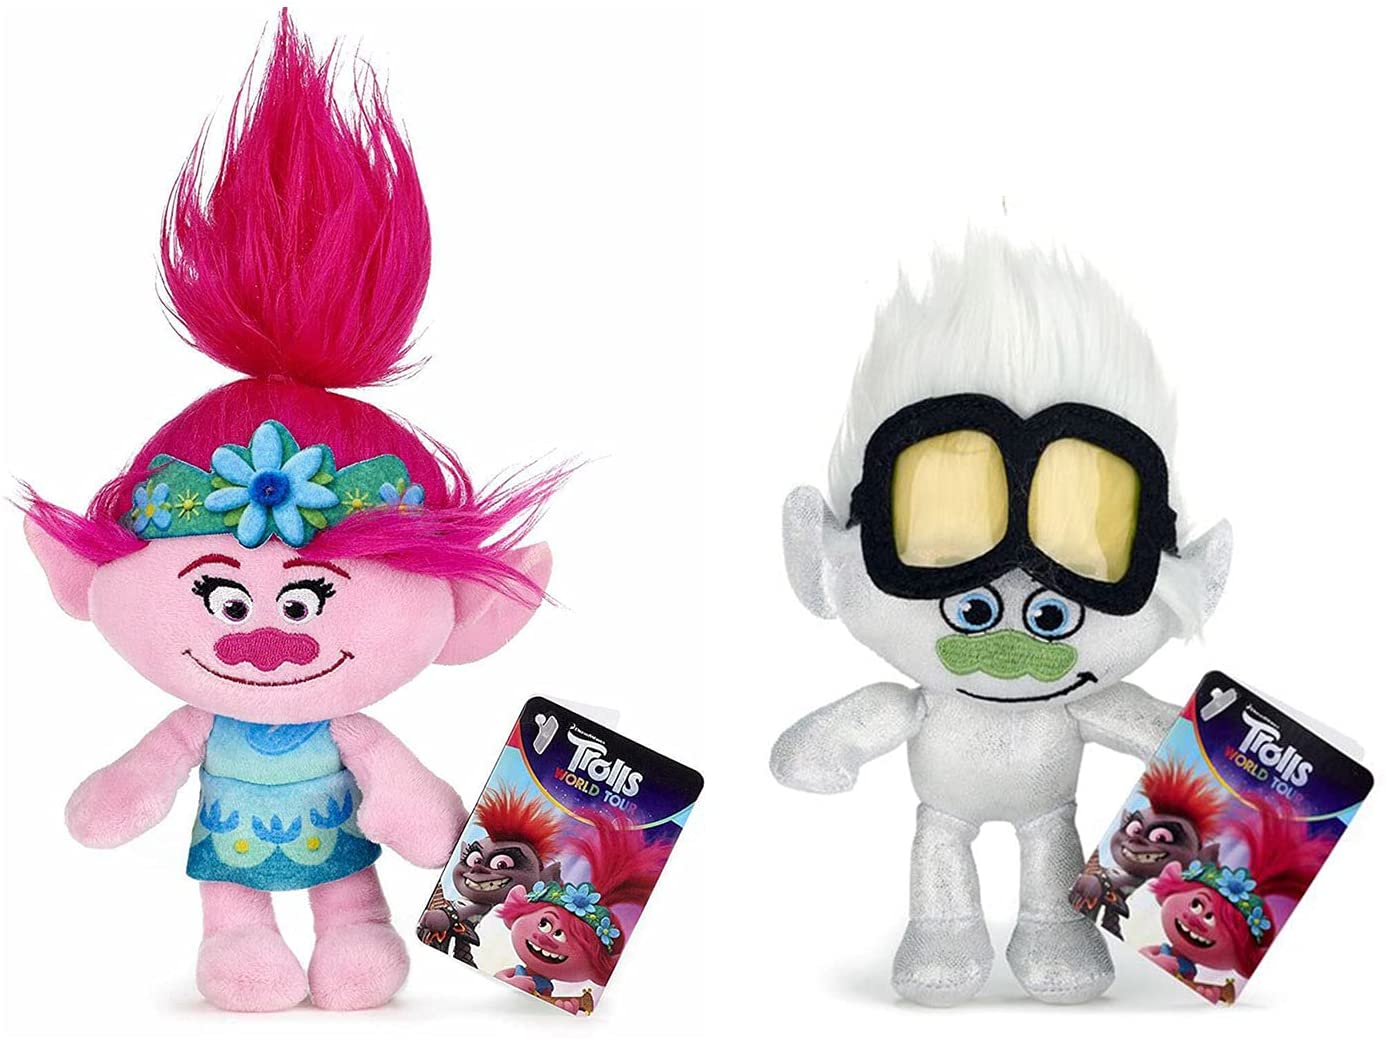 DreamWorks Trolls World Tour Movie Poppy Plush Doll Pink 8 Inch for sale online 